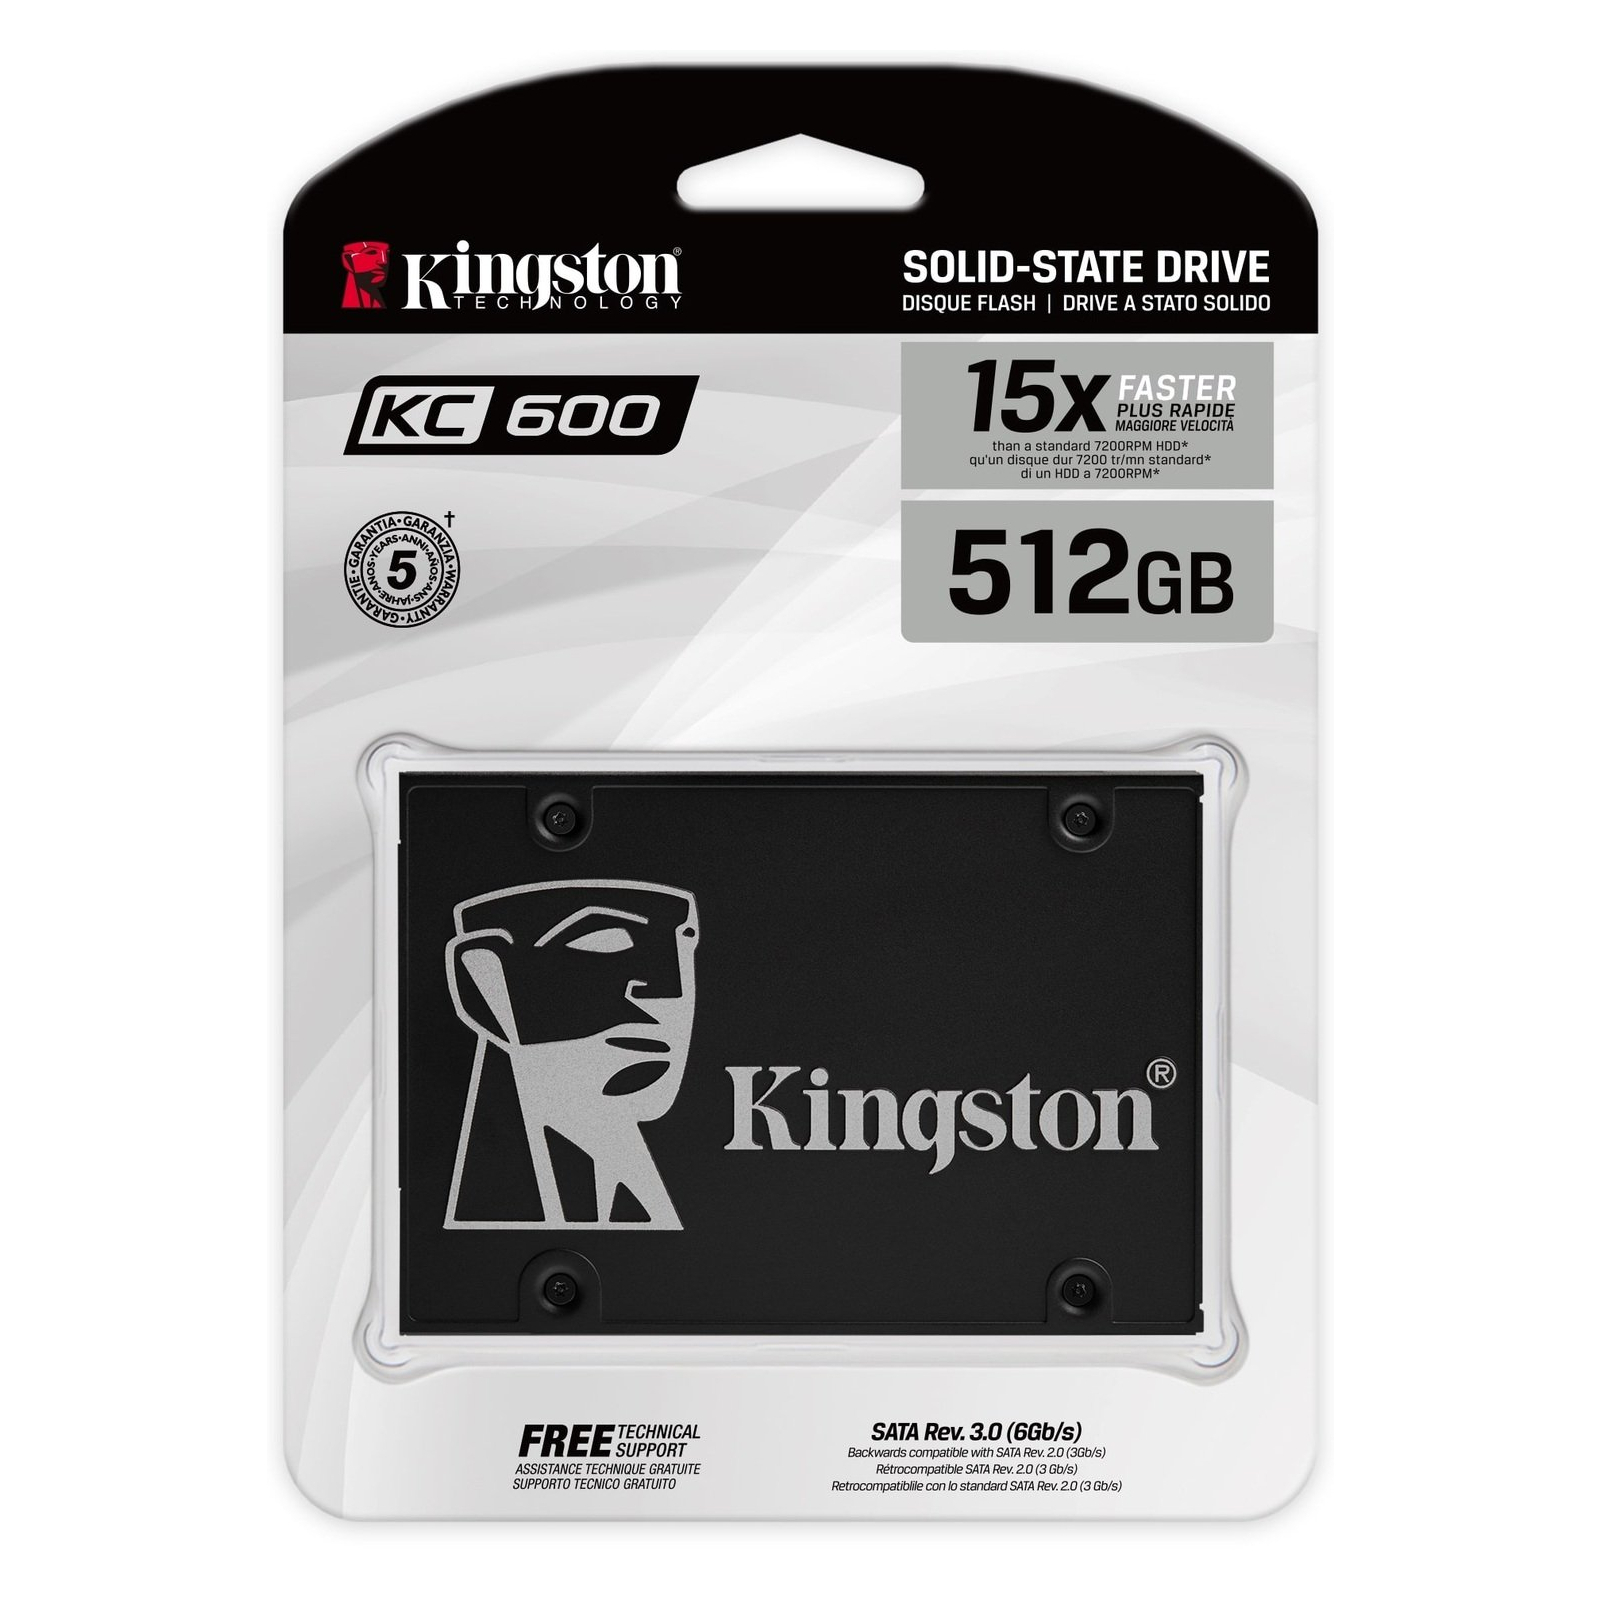 Накопитель SSD 2.5" 512GB Kingston (SKC600/512G) изображение 3